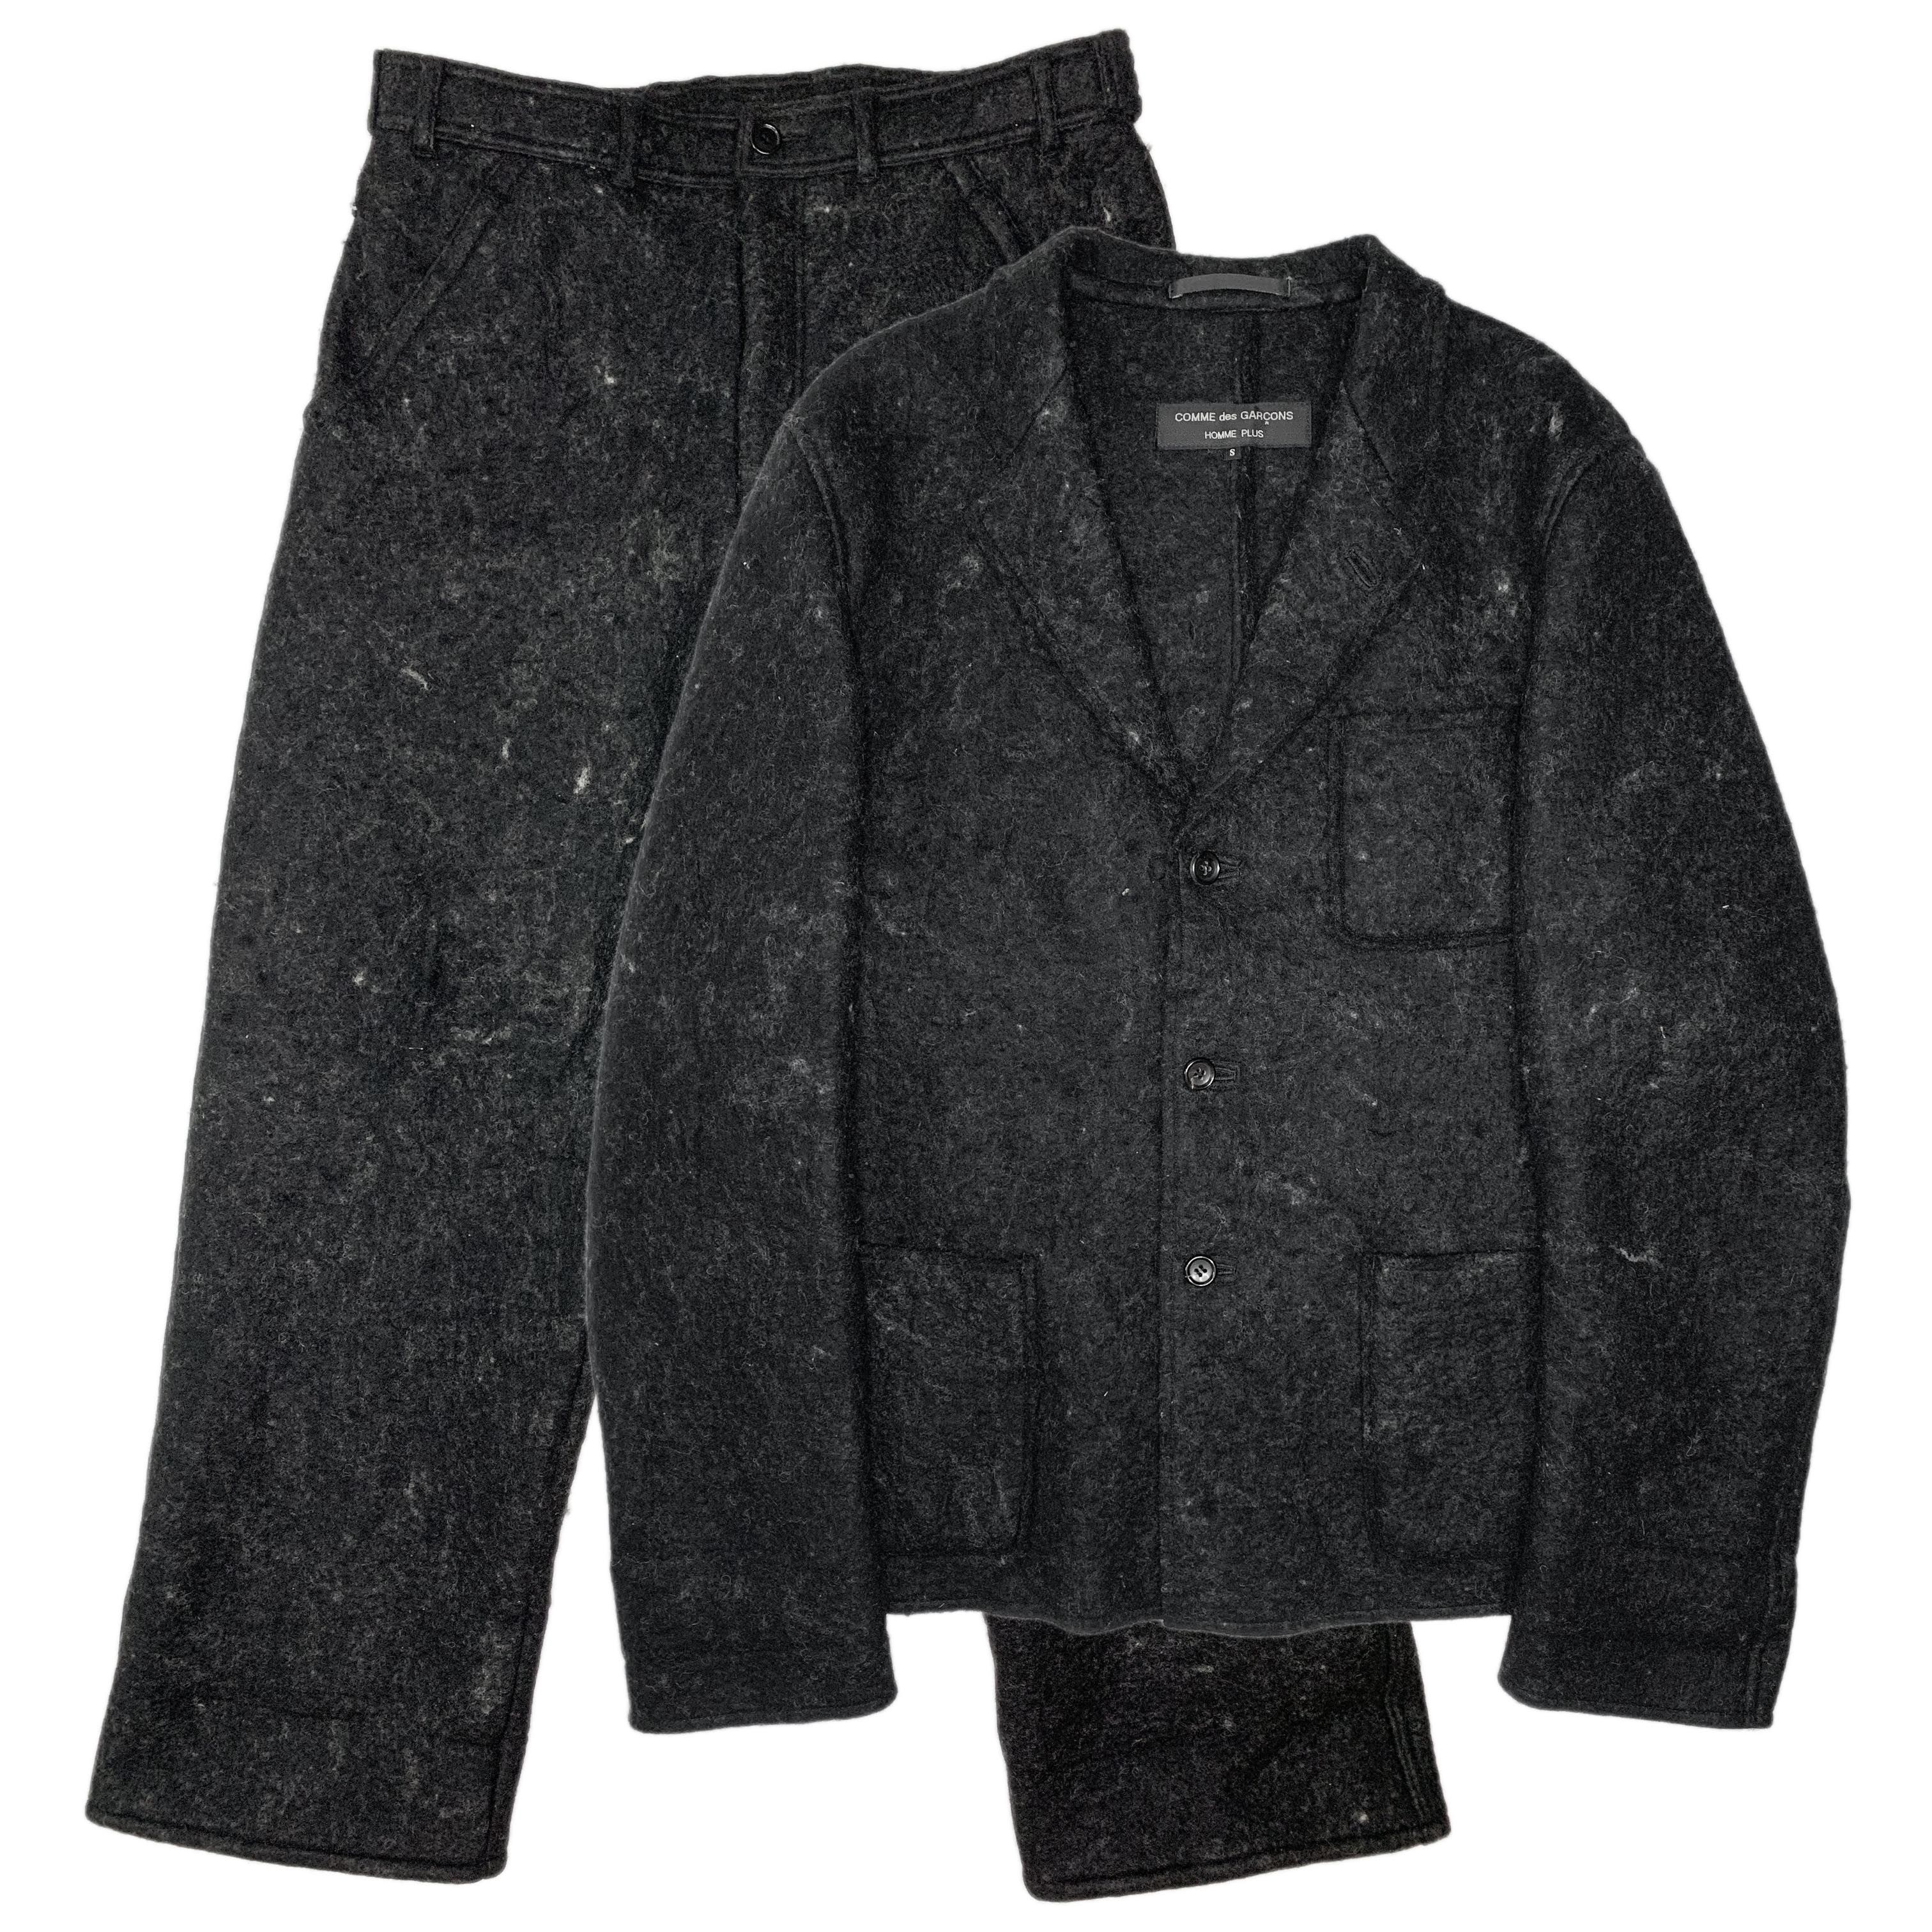 AW95 Oversized Pressed Wool Felt Suit - 1